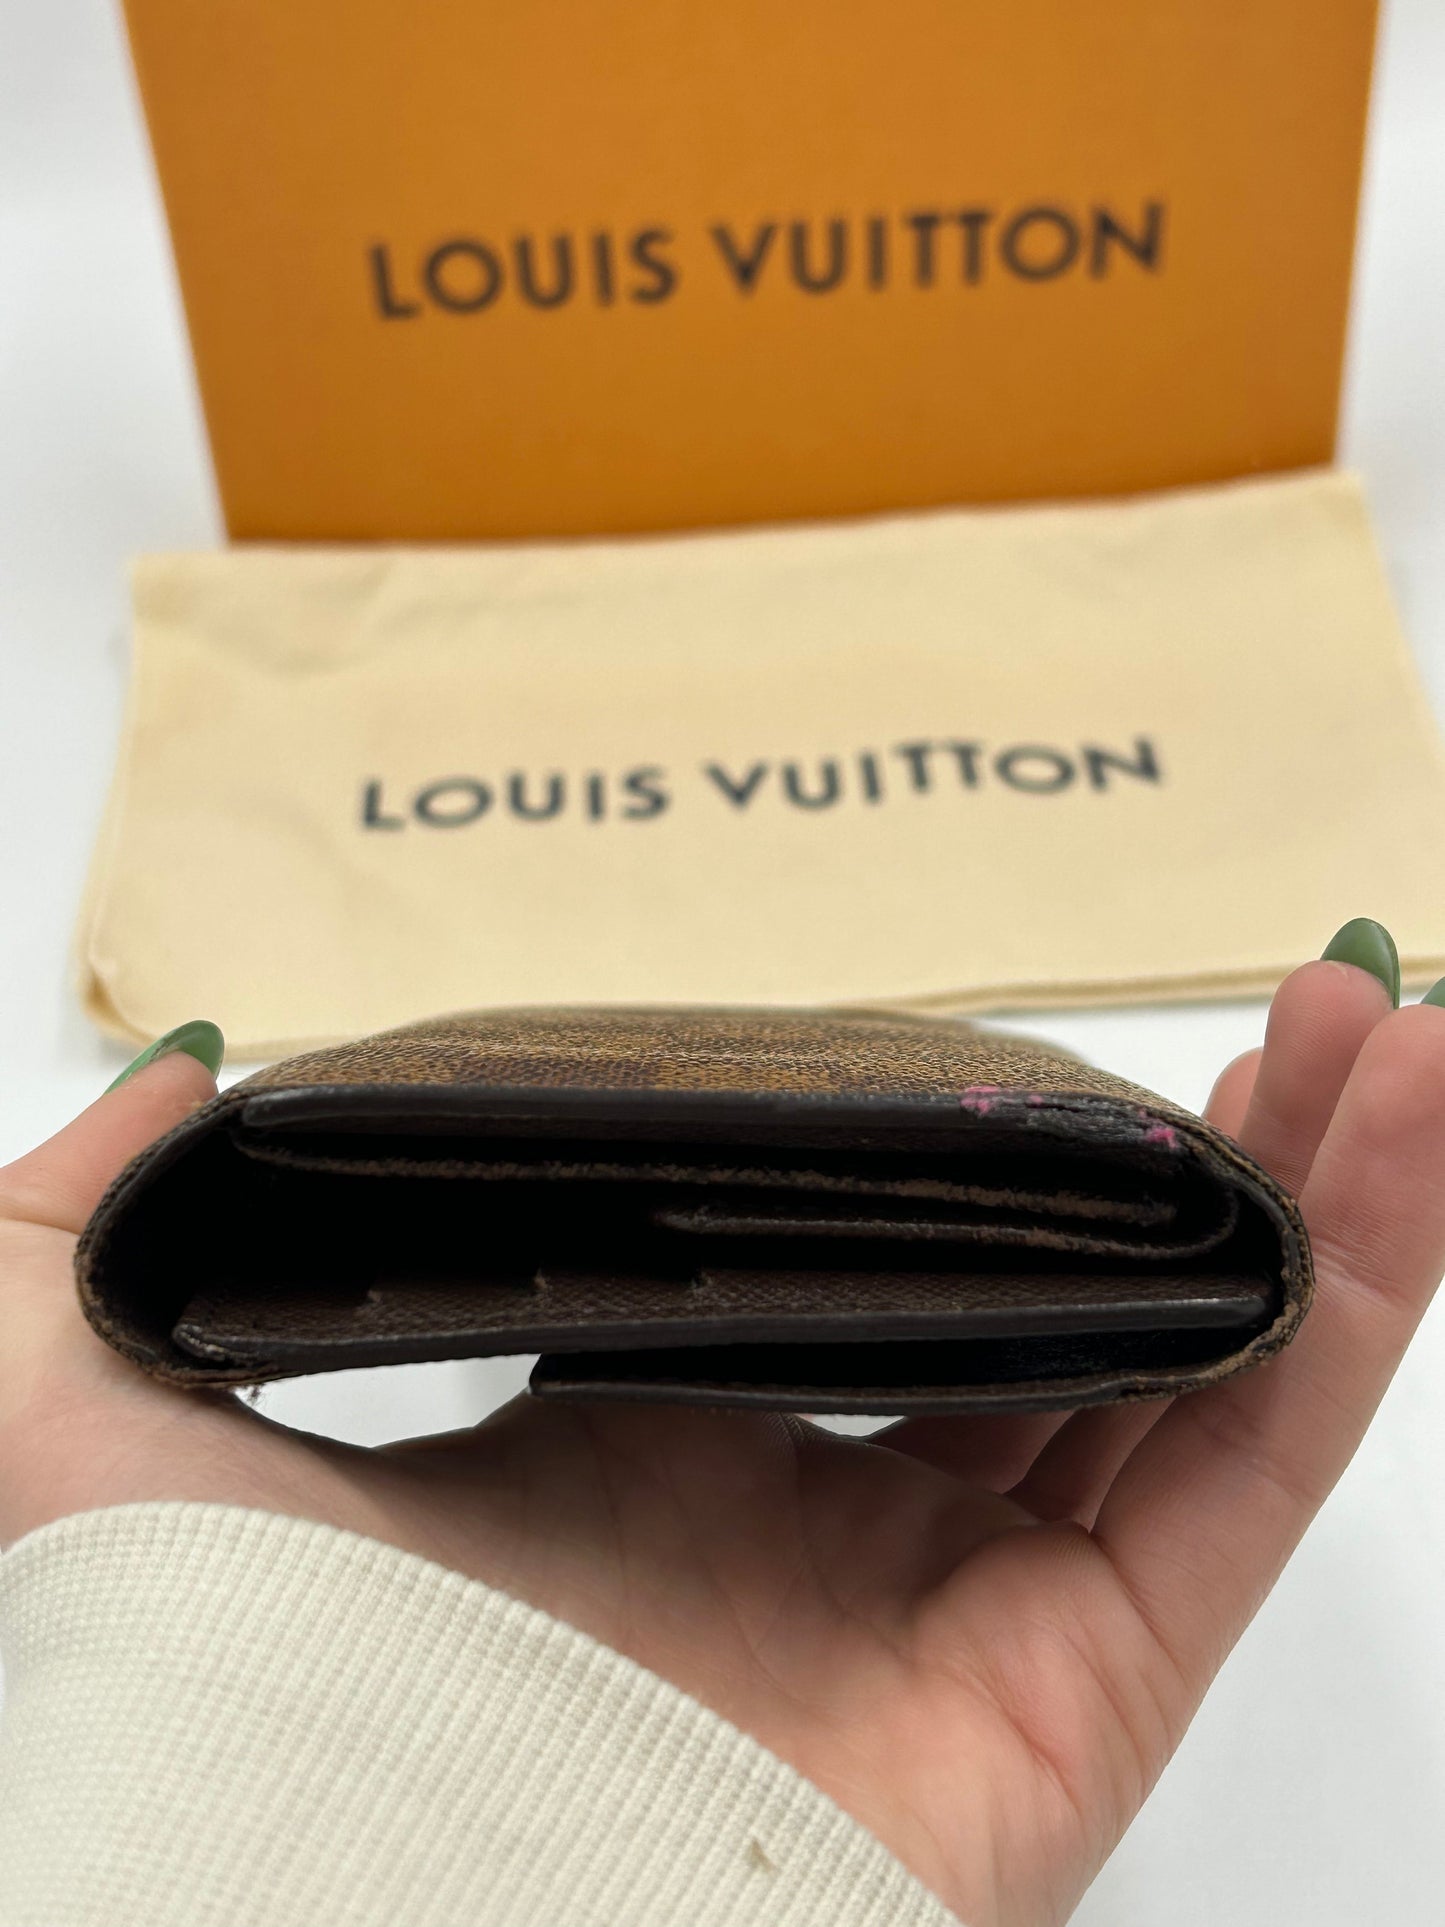 Louis Vuitton Damier Ebene Wallet